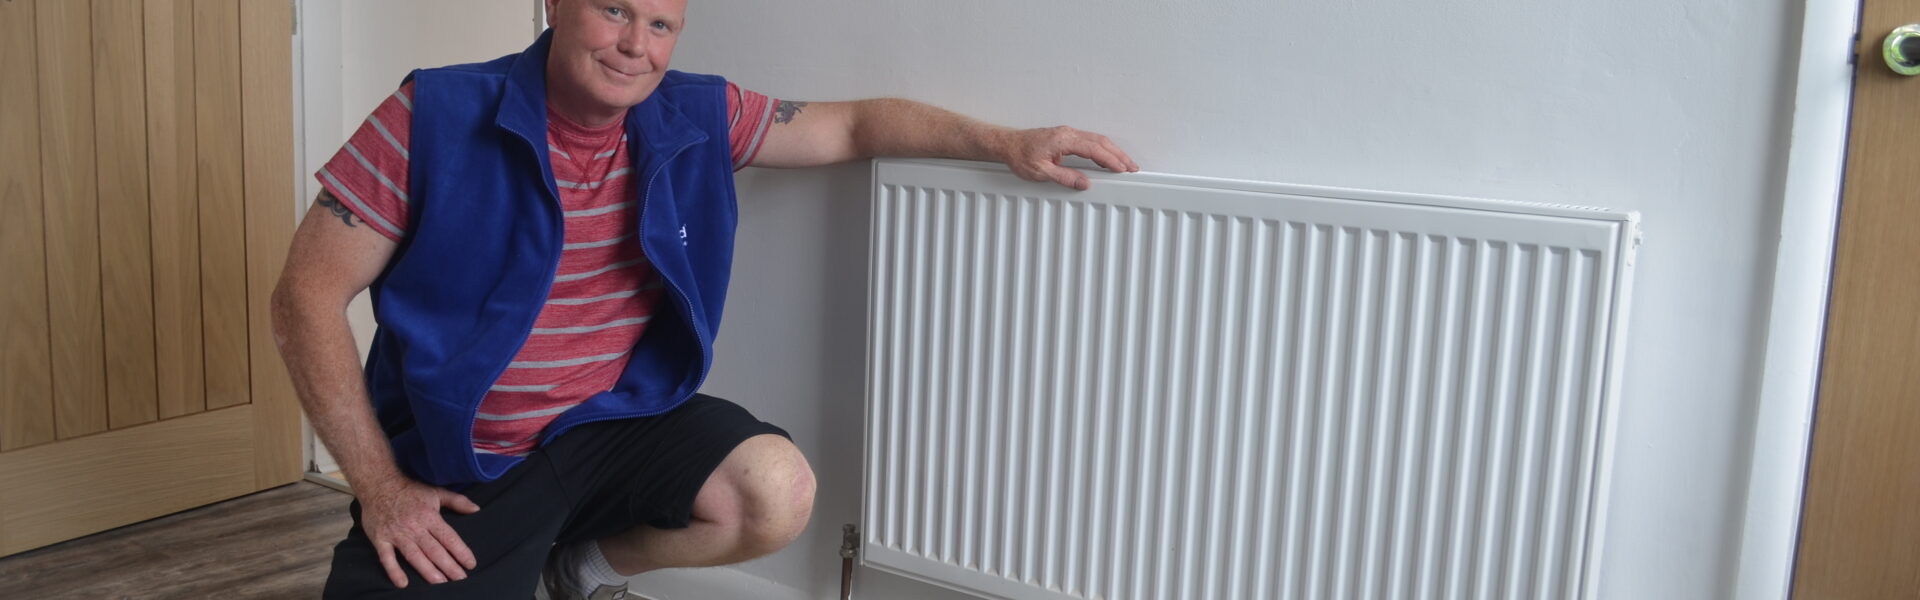 man with radiator